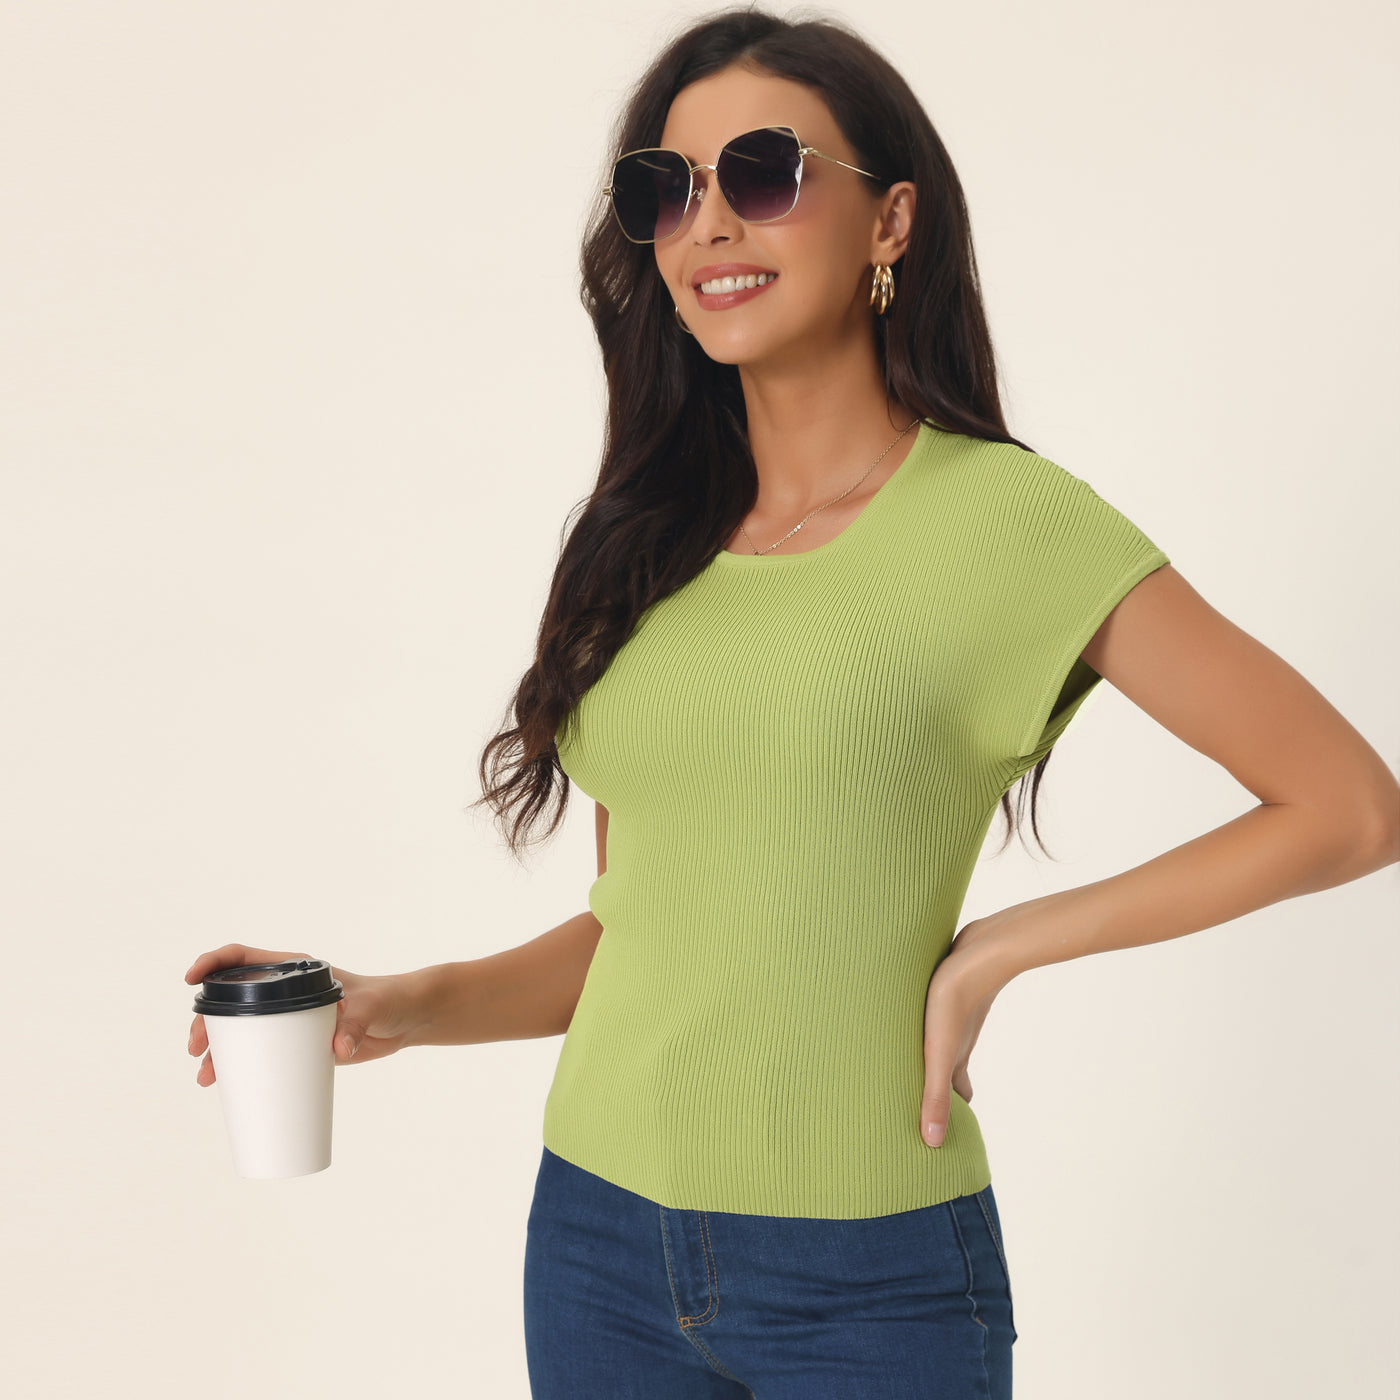 Bublédon Women's Casual Cap Sleeve Knit T Shirts Crewneck Basic Summer Tops Slim Fit Solid Color Blouse